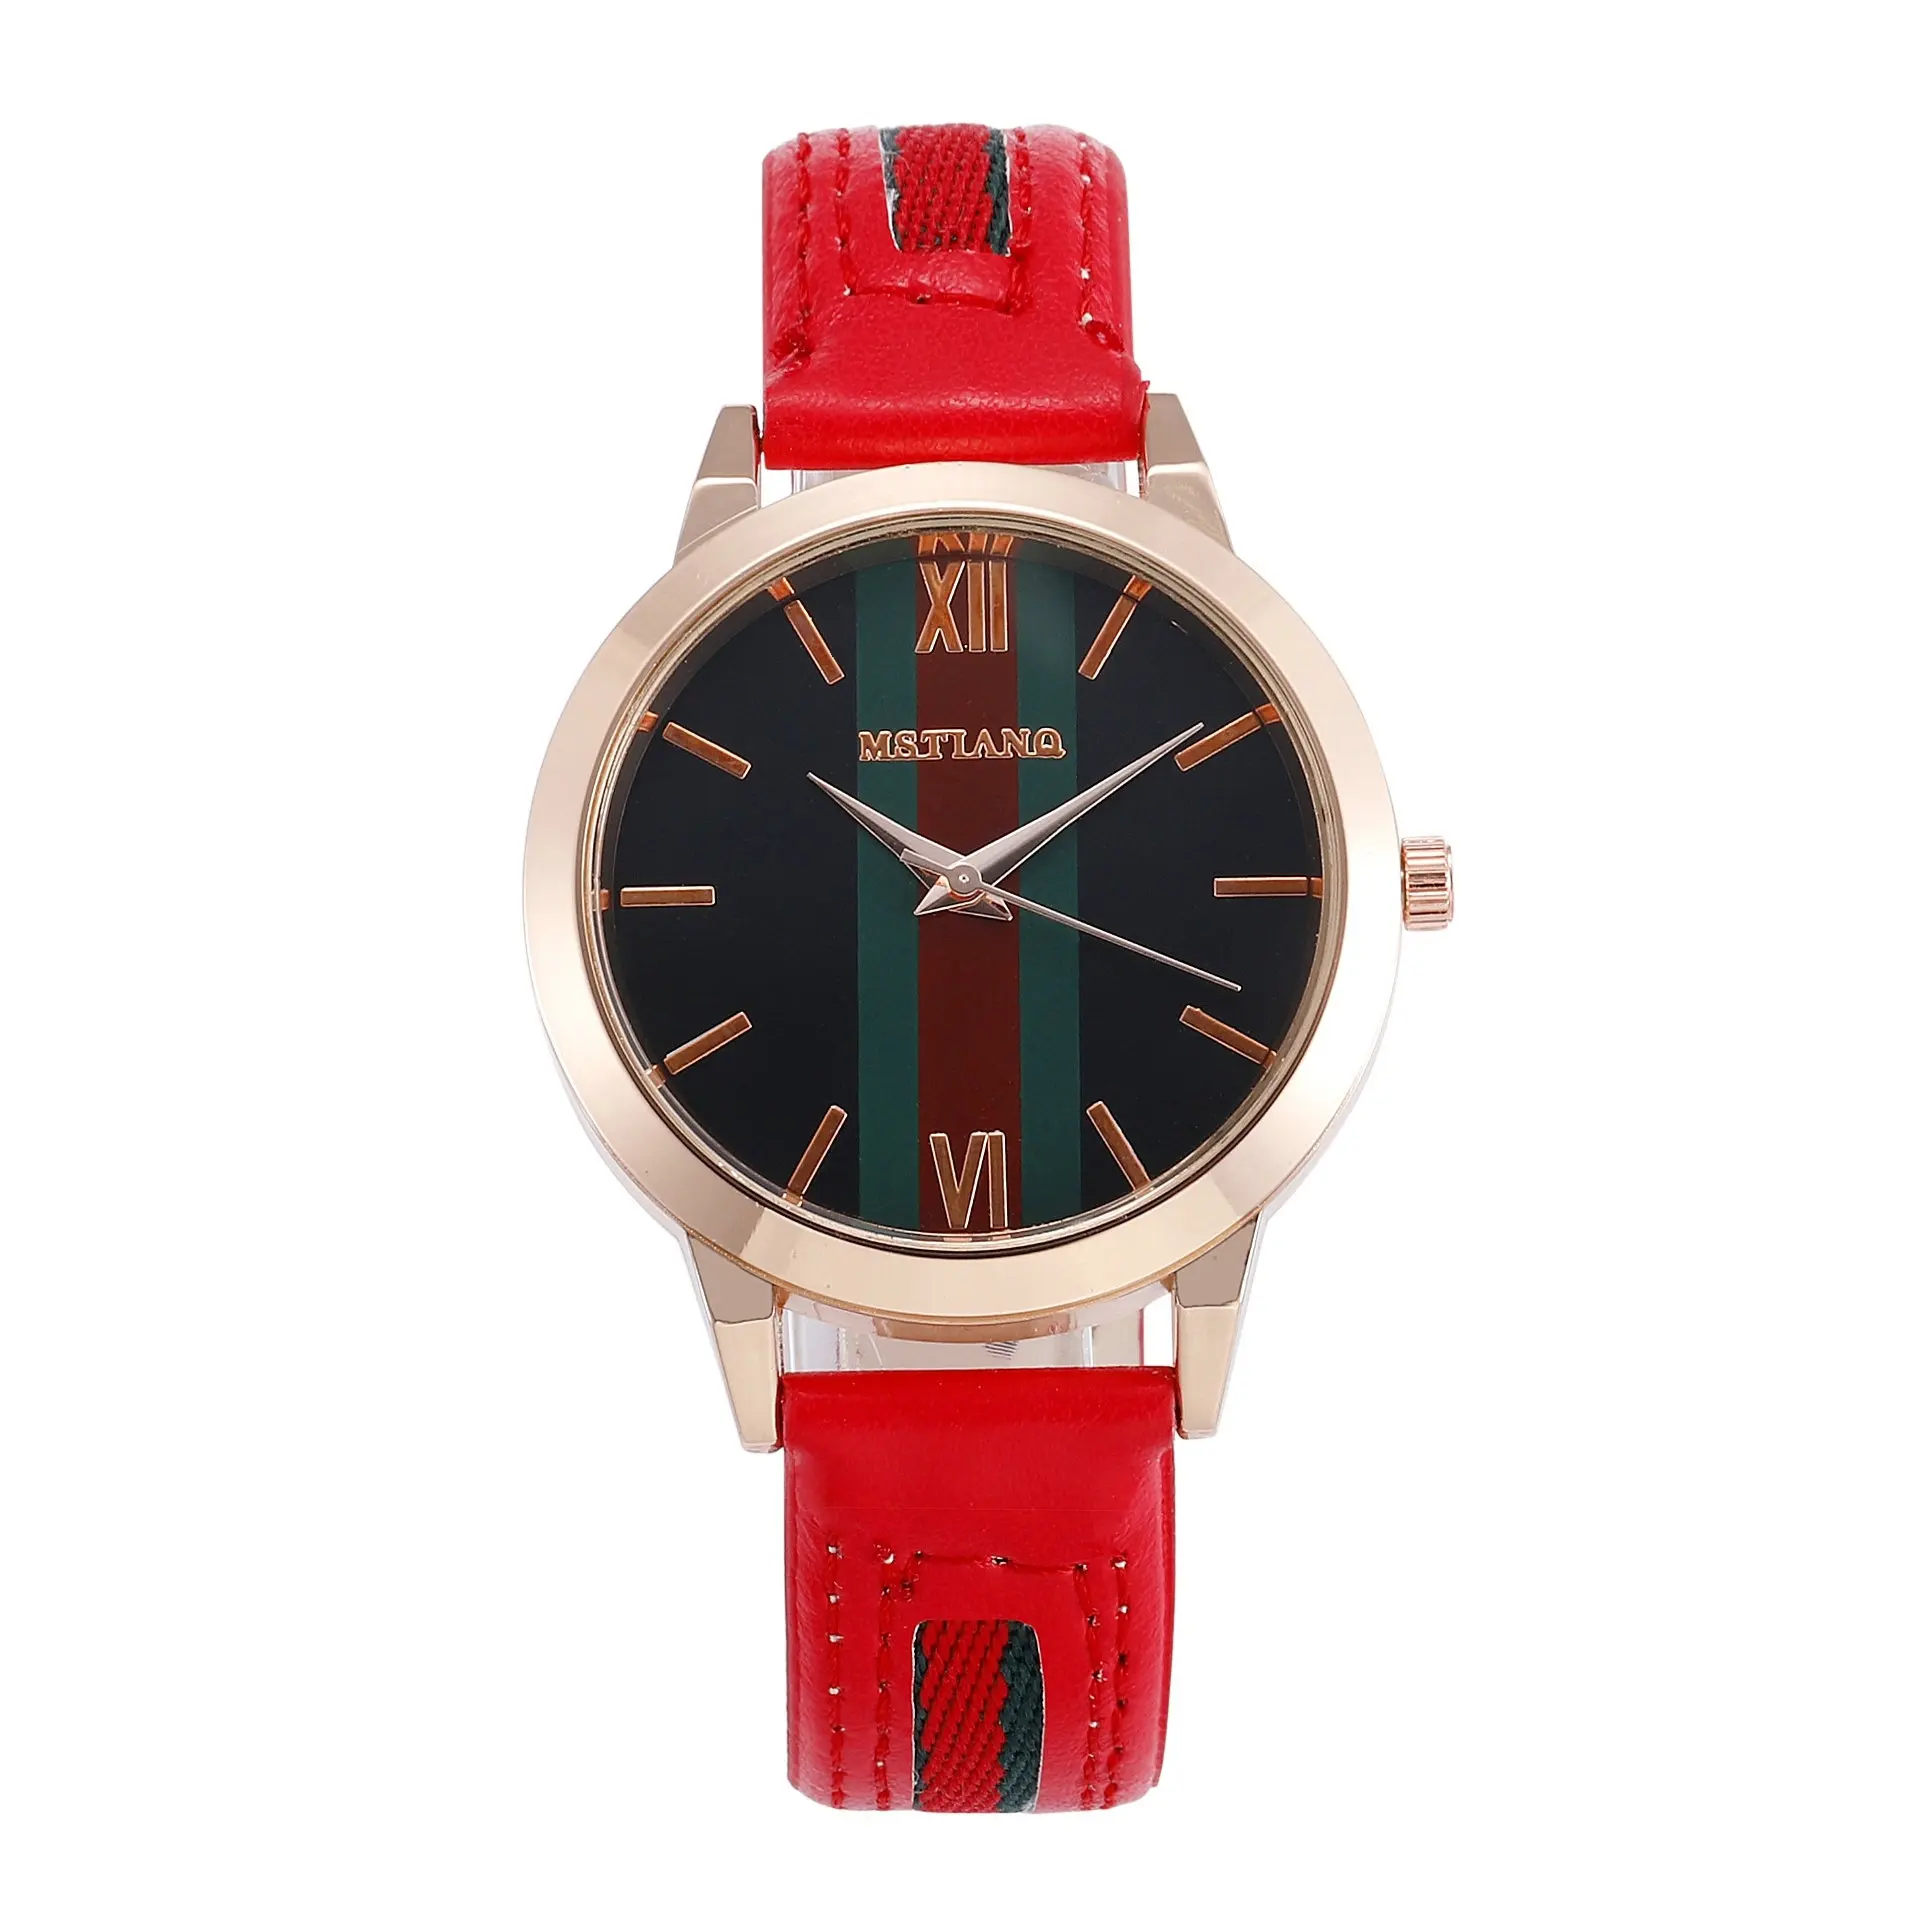 Top New Fashion Luxury Leather Women Watches Ladies Watch Woman Dress Quartz Watch Female Gift Clock Montre Femme Relojes Mujer|Women's Watches| - AliExpress